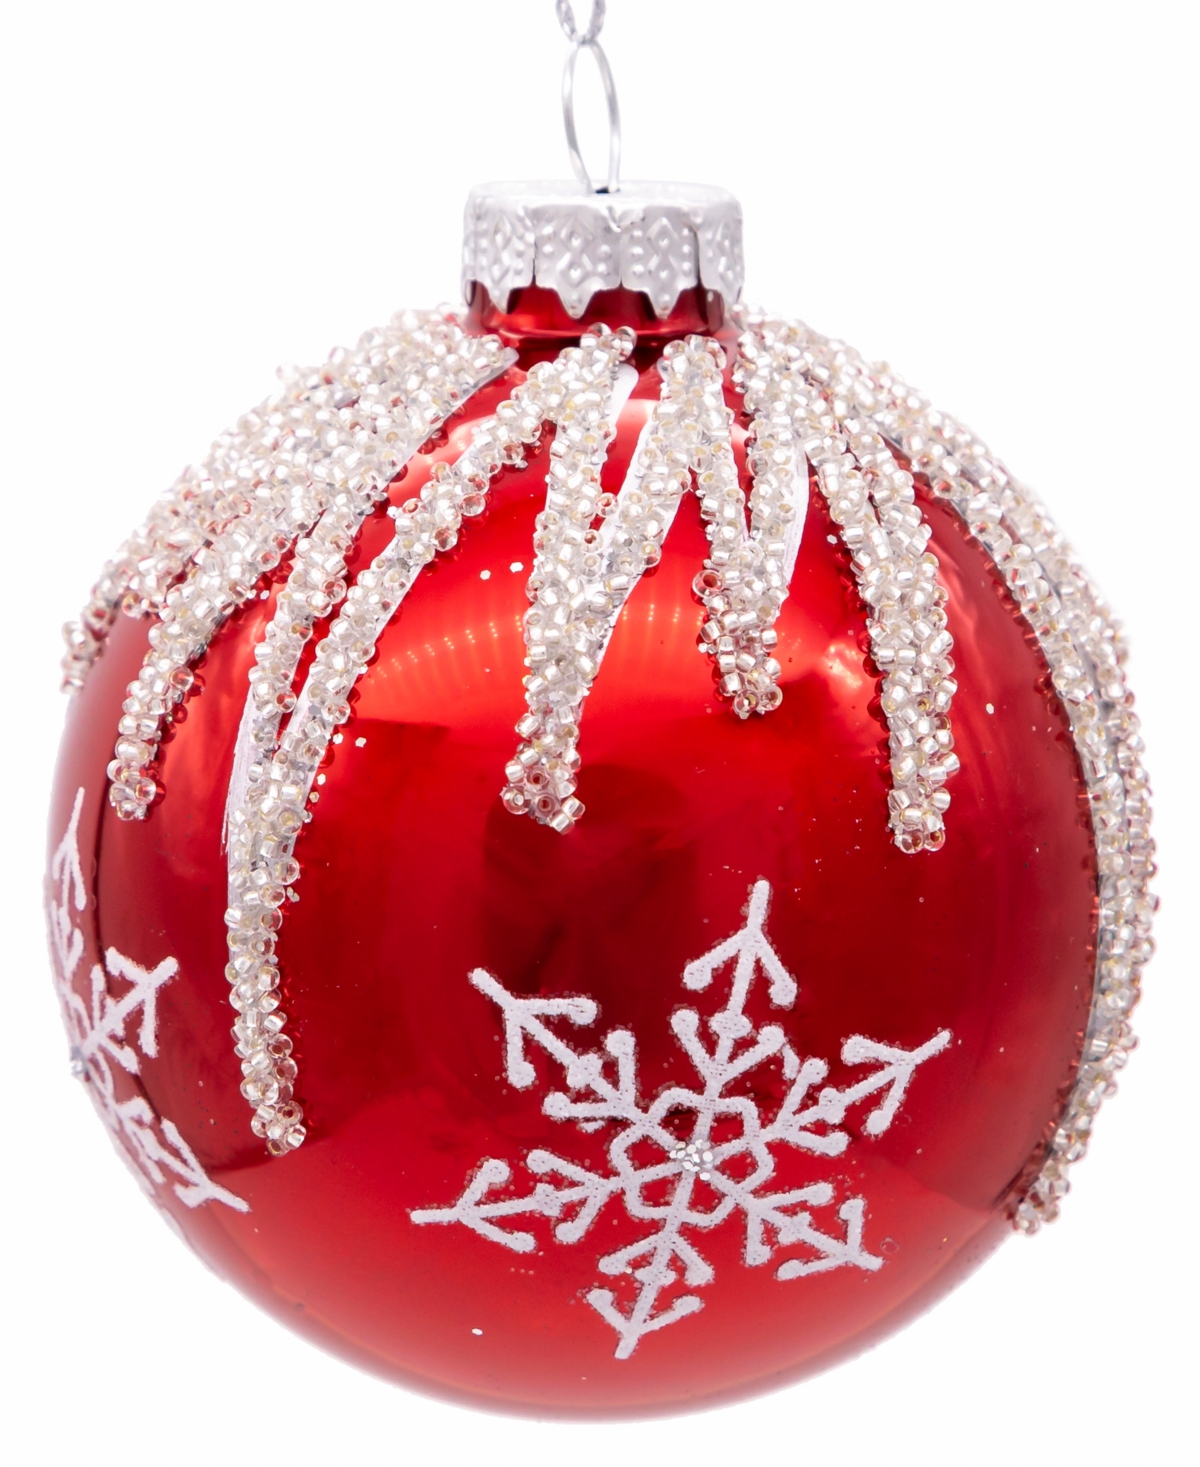 Kurt Adler 80mm Snowflake Ball Ornaments, 6 Piece Set In Red